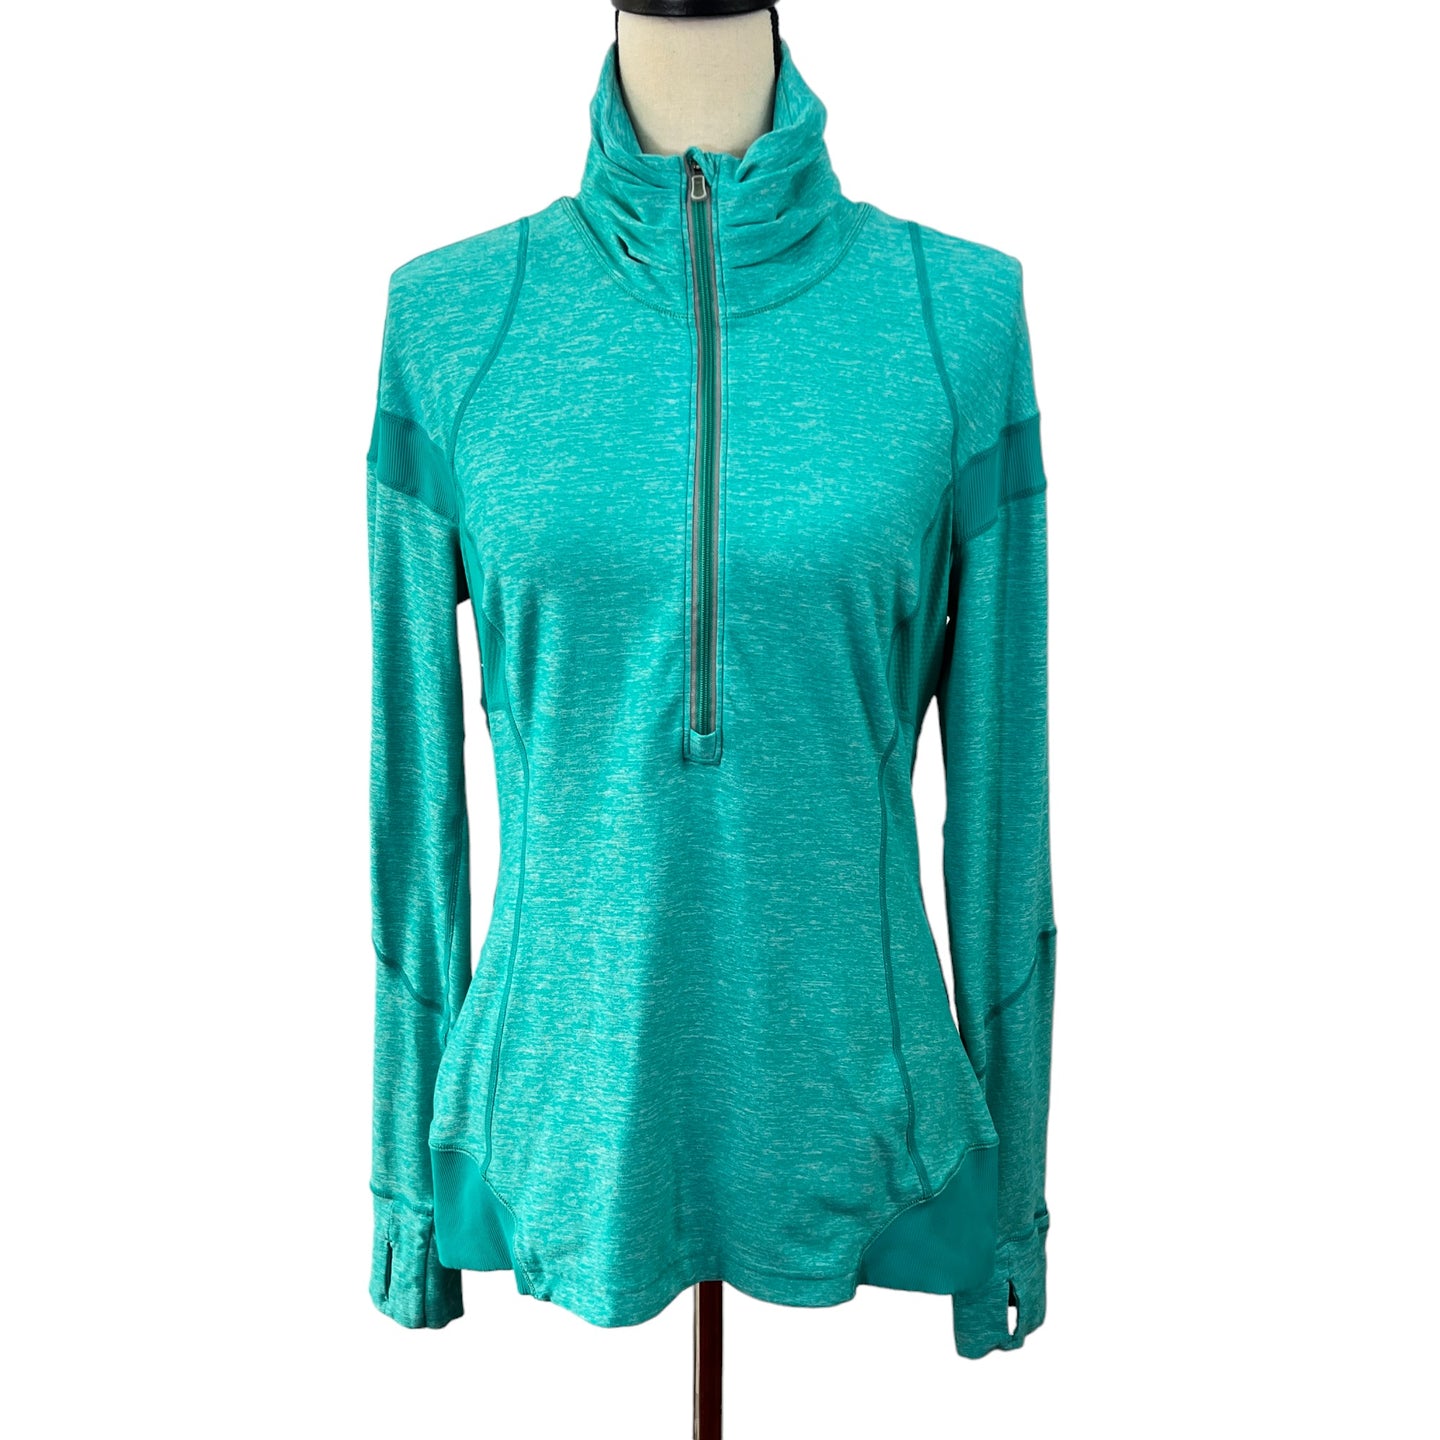 Lululemon Athletica Women’s Teal Half Zip Pullover Jacket size medium